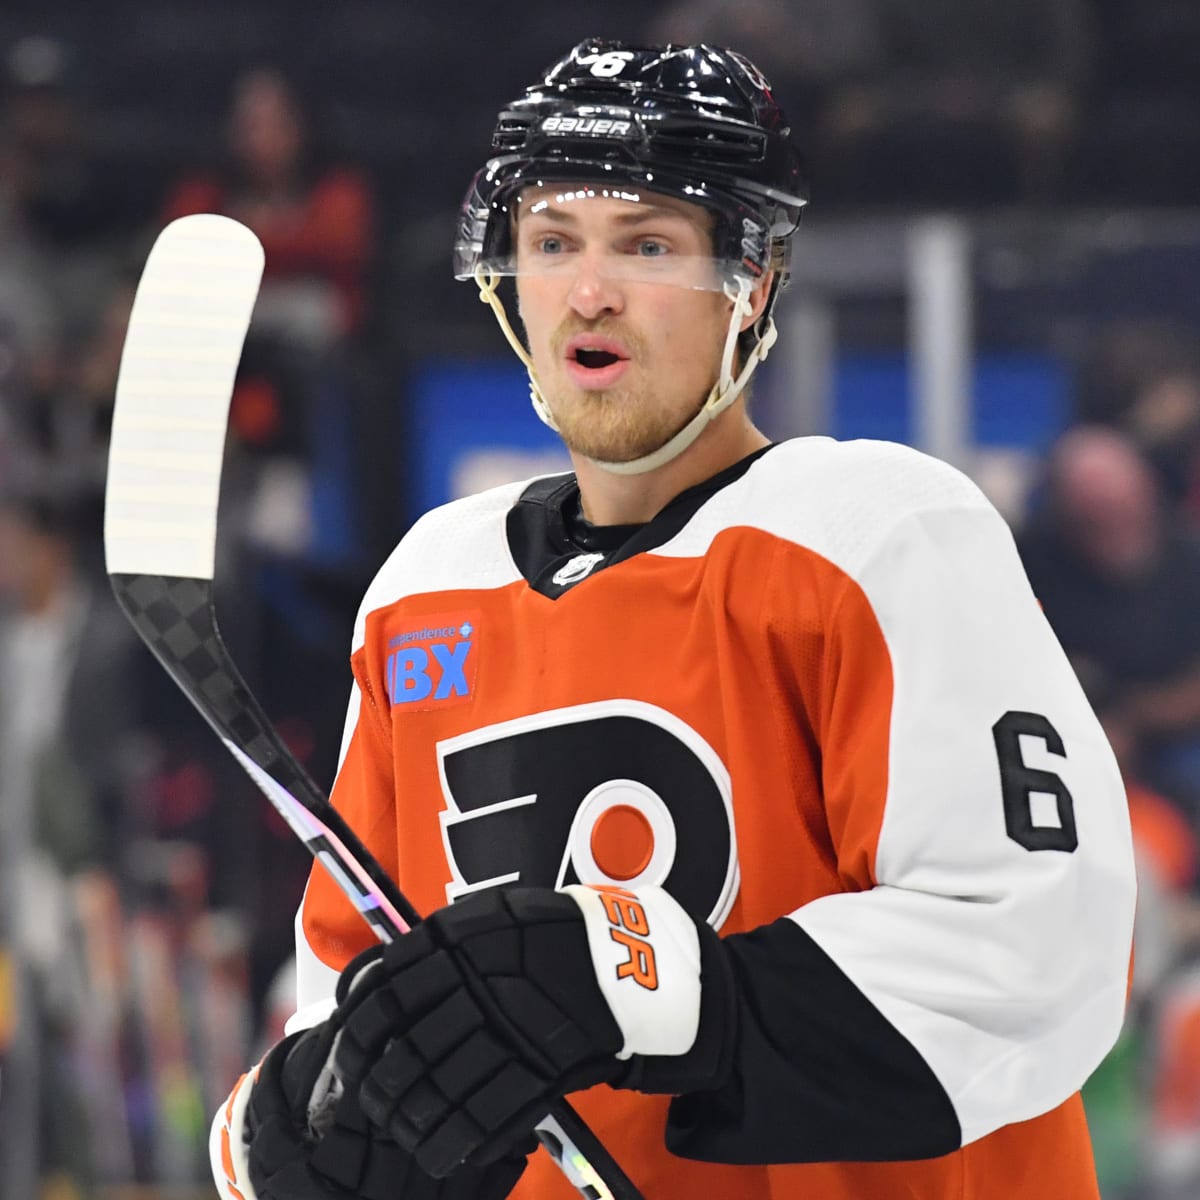 Flyers vs. Penguins: Noah Cates, Morgan Frost spearhead upset of